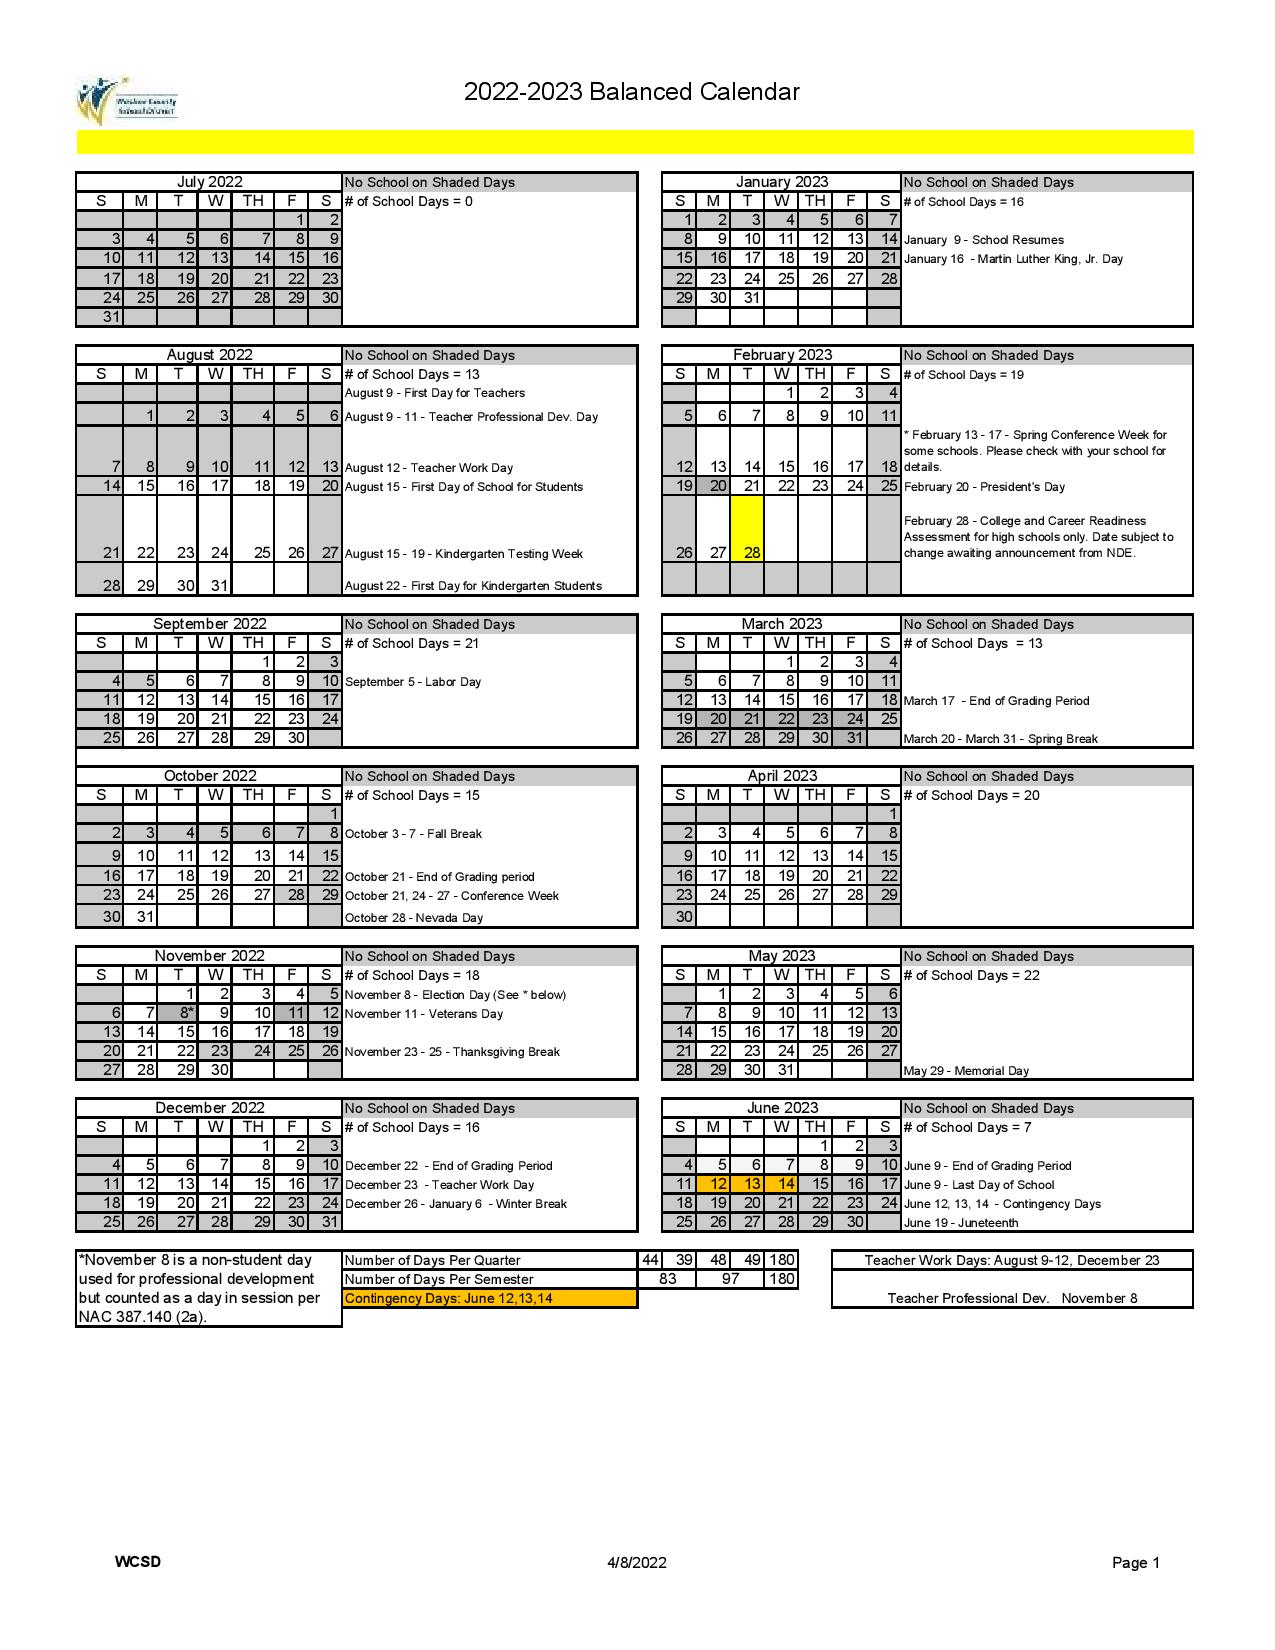 Washoe County School District Calendar 2022-2023